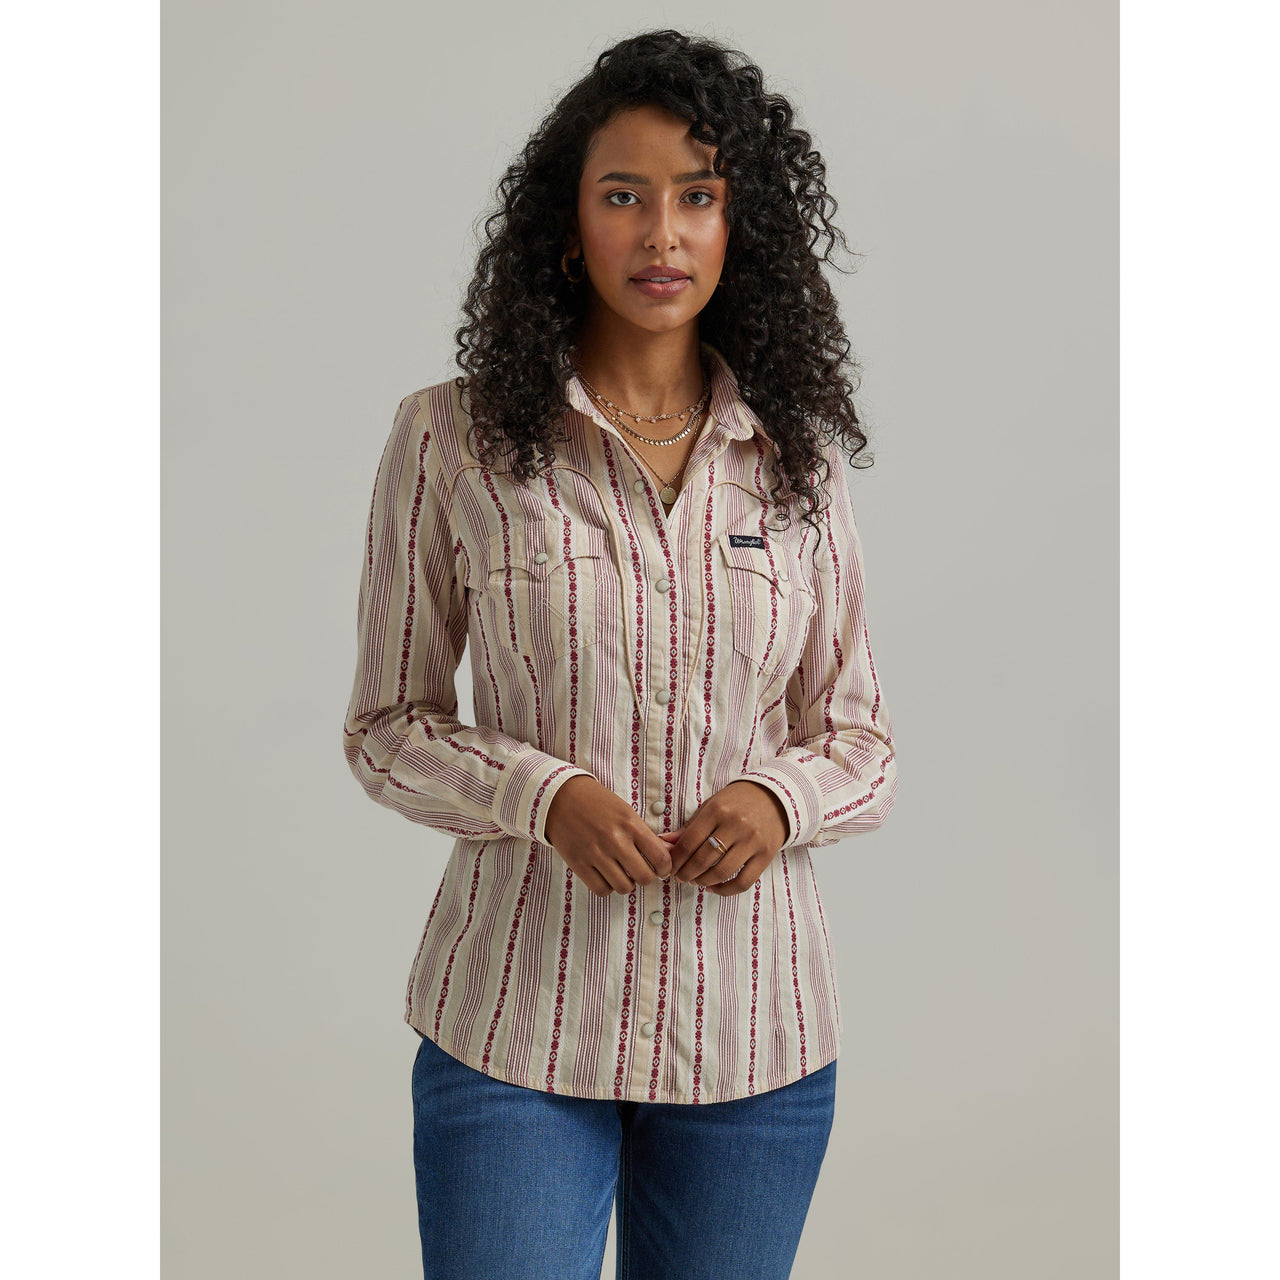 Wrangler Women's Americana Long Sleeve Stripe Snap Shirt - Pink